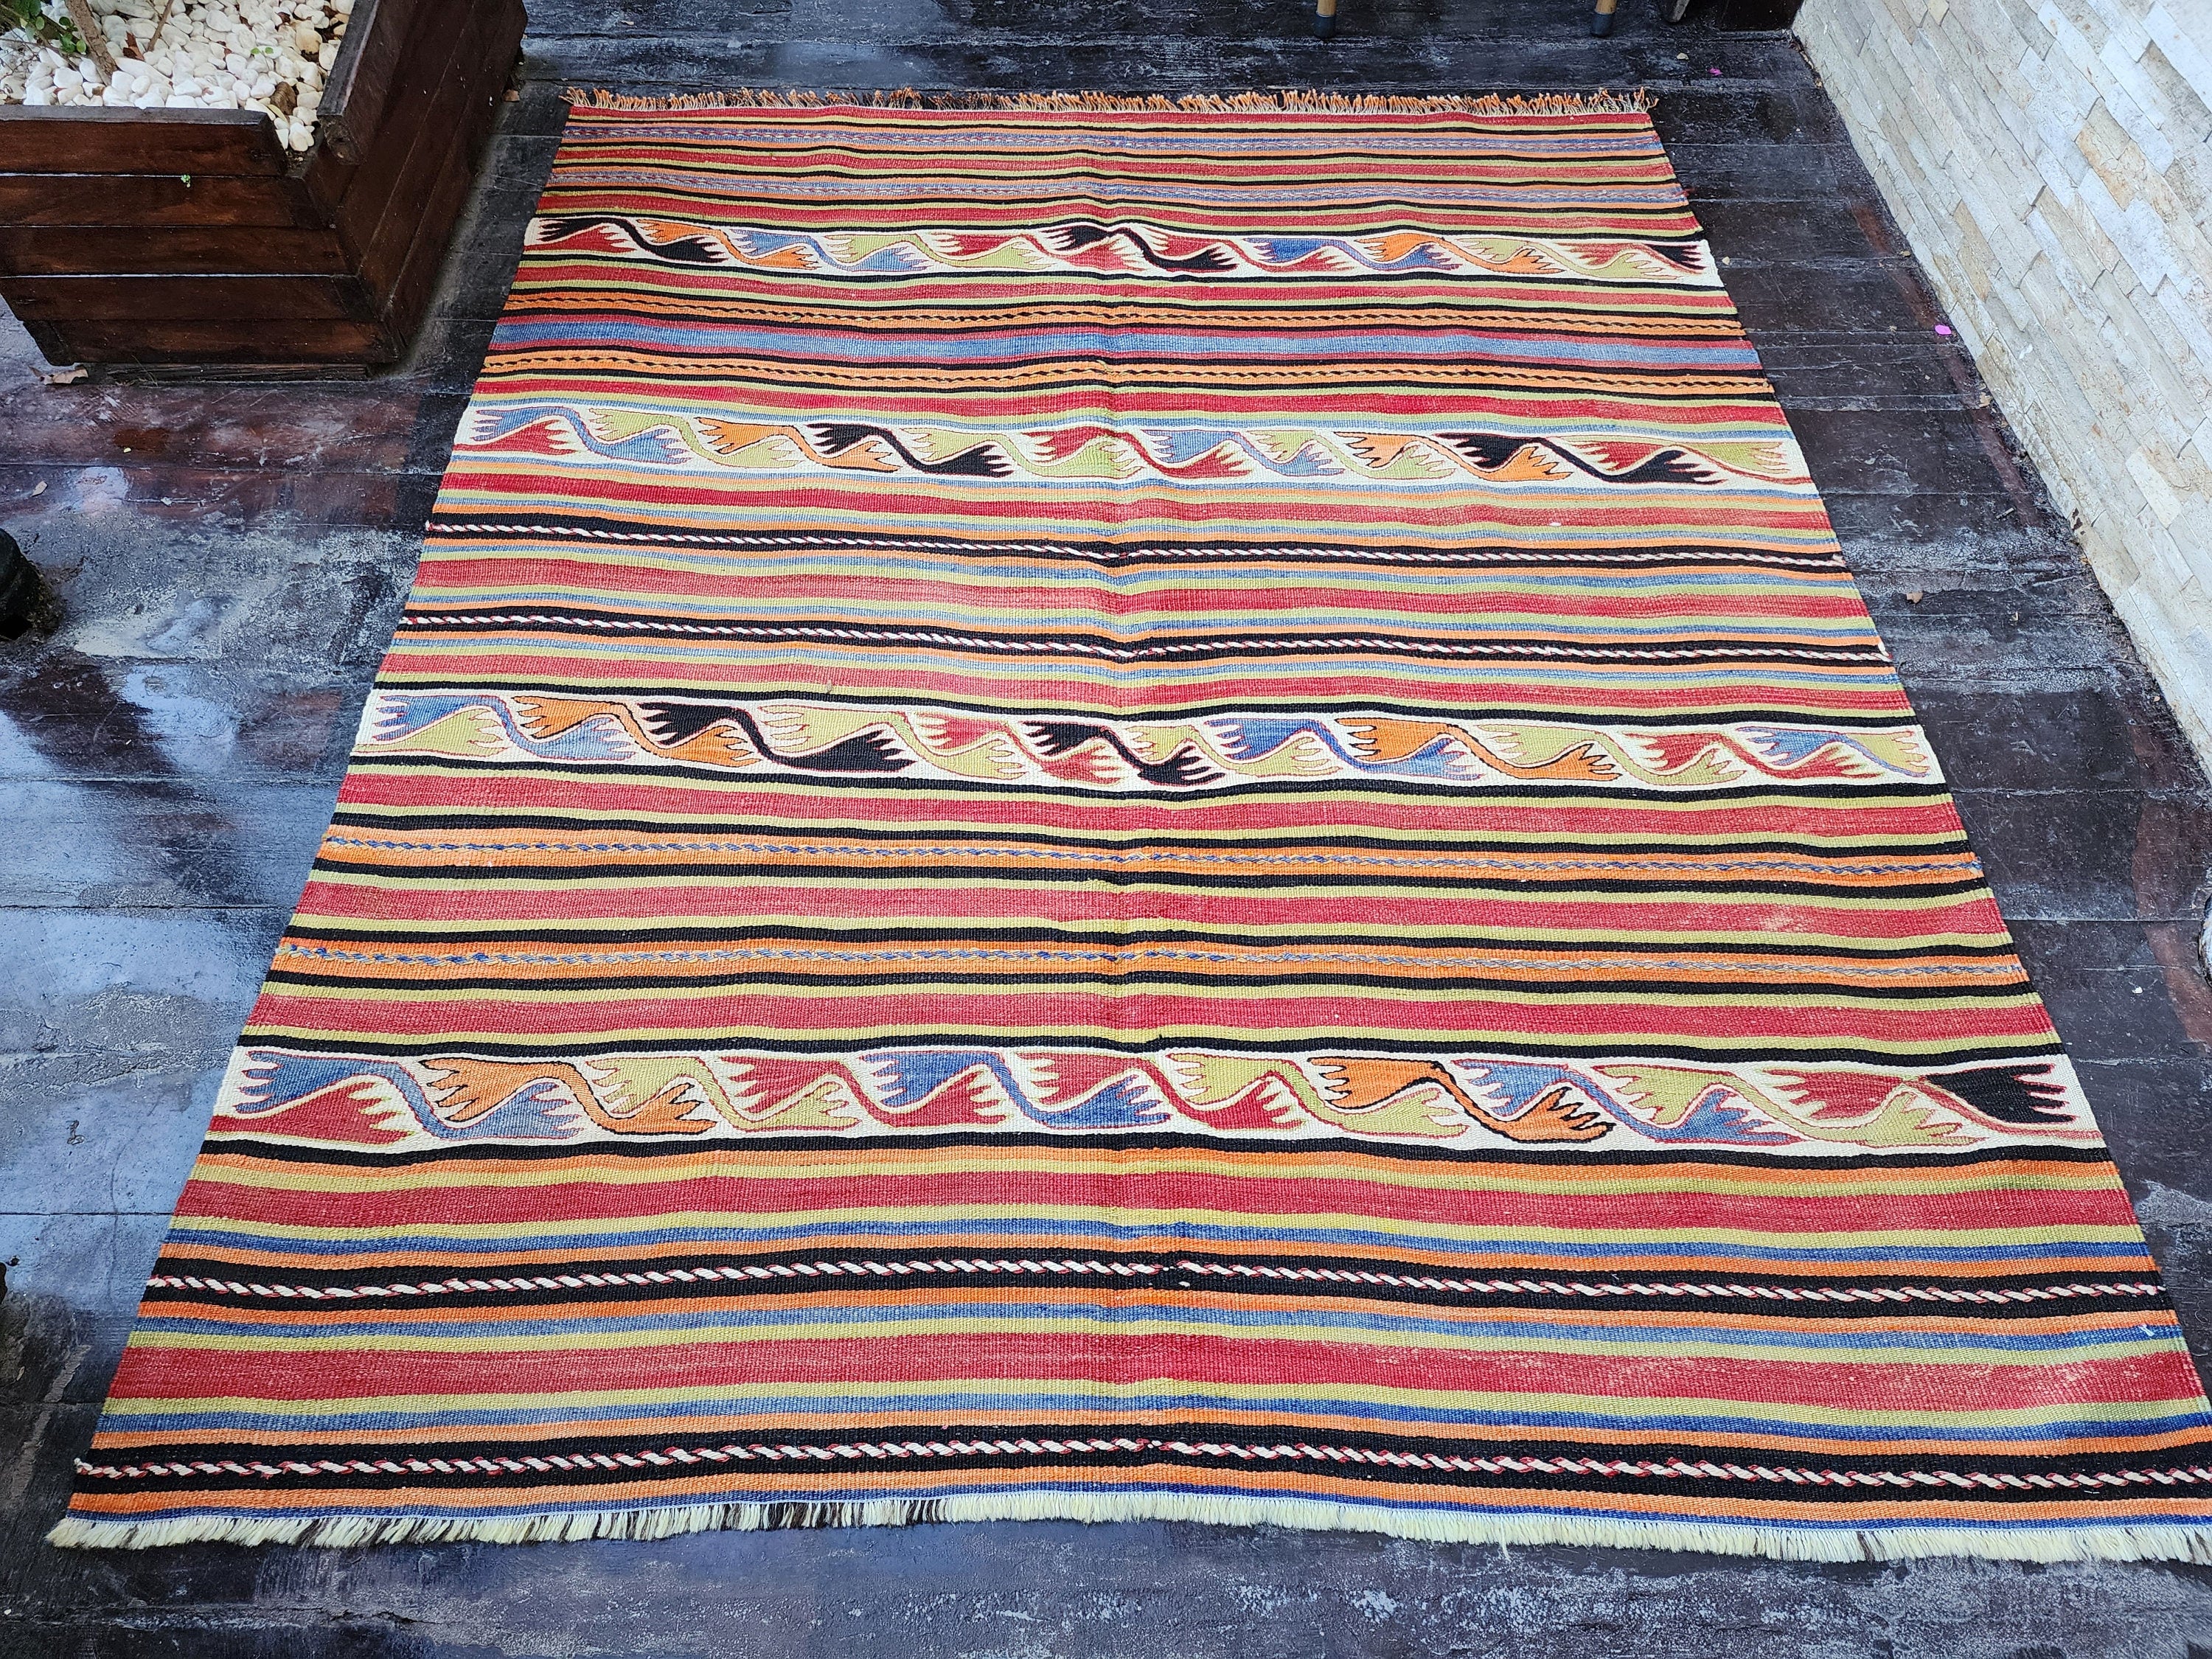 Konya Turkish Kilim Rug, Handmade Organic Wool Rug, Tribal Nomadic Moroccan Bohemian Living Room Rustic Decor Persian Area Rug 6'1"x''5"